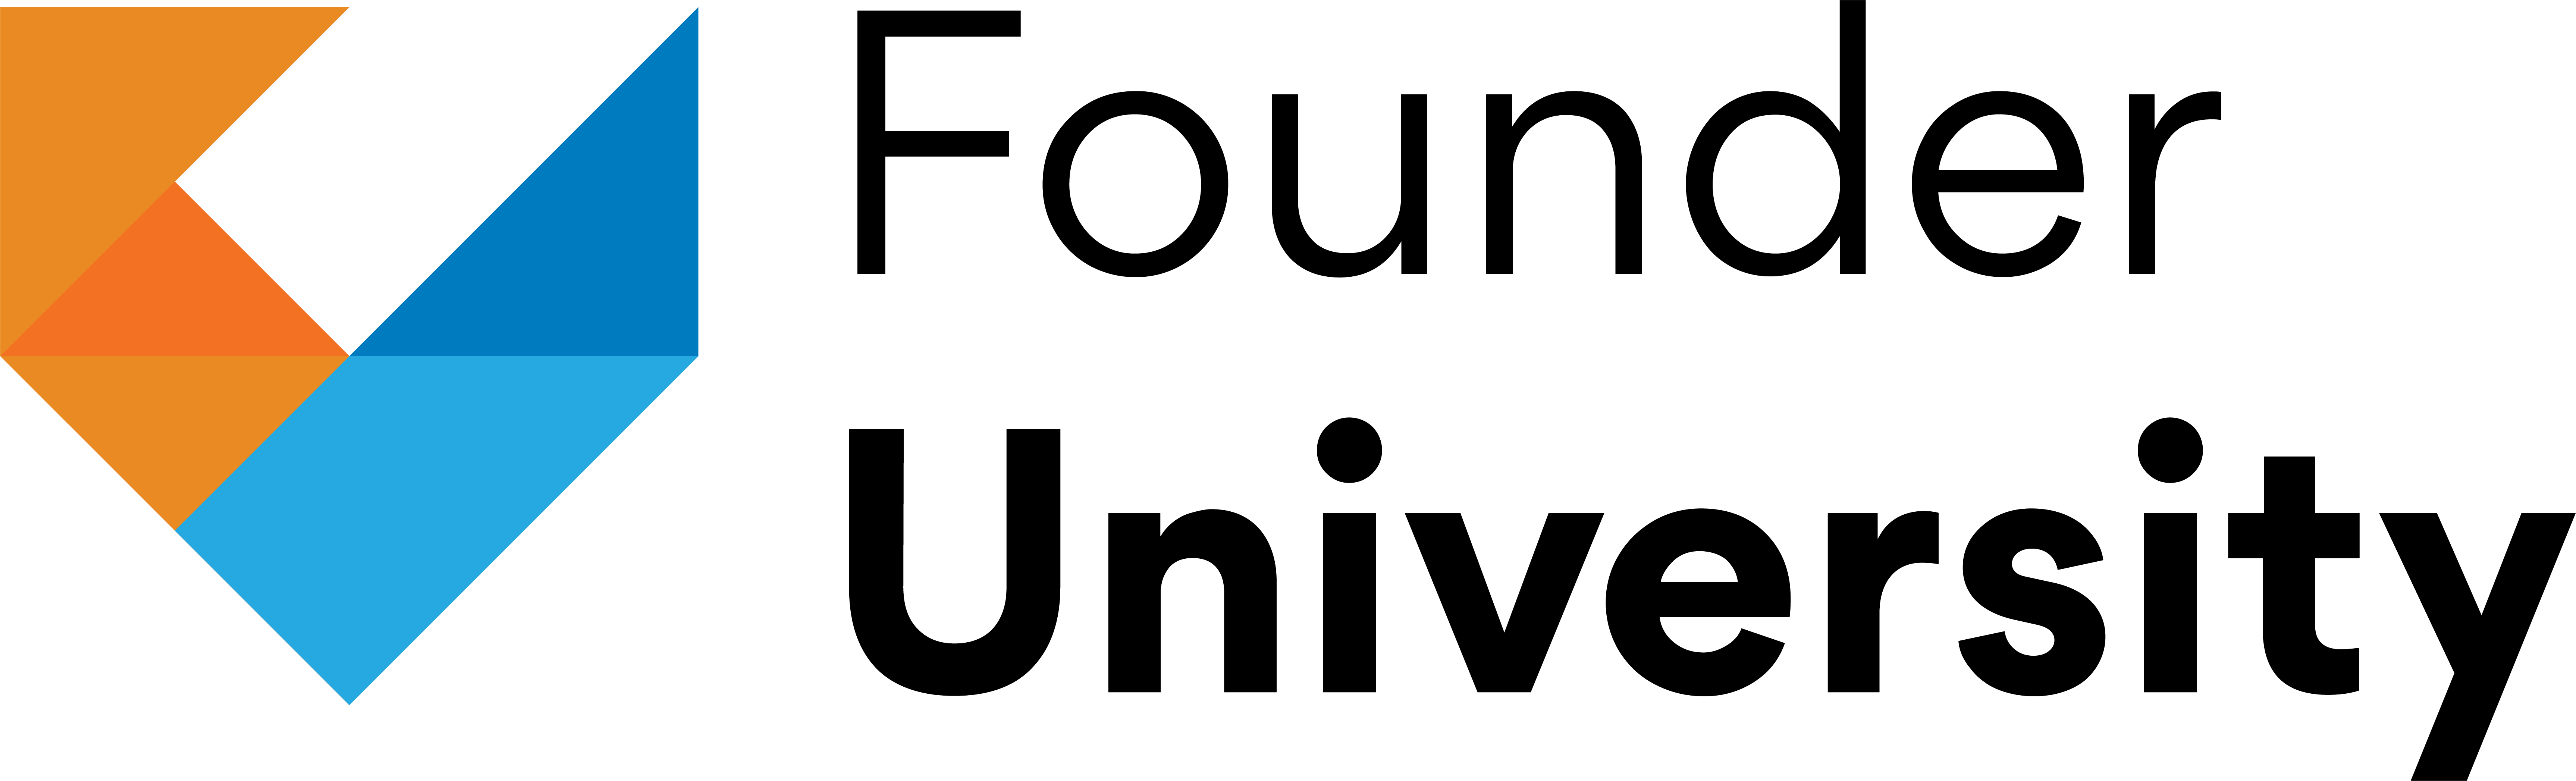 Founder University Logo